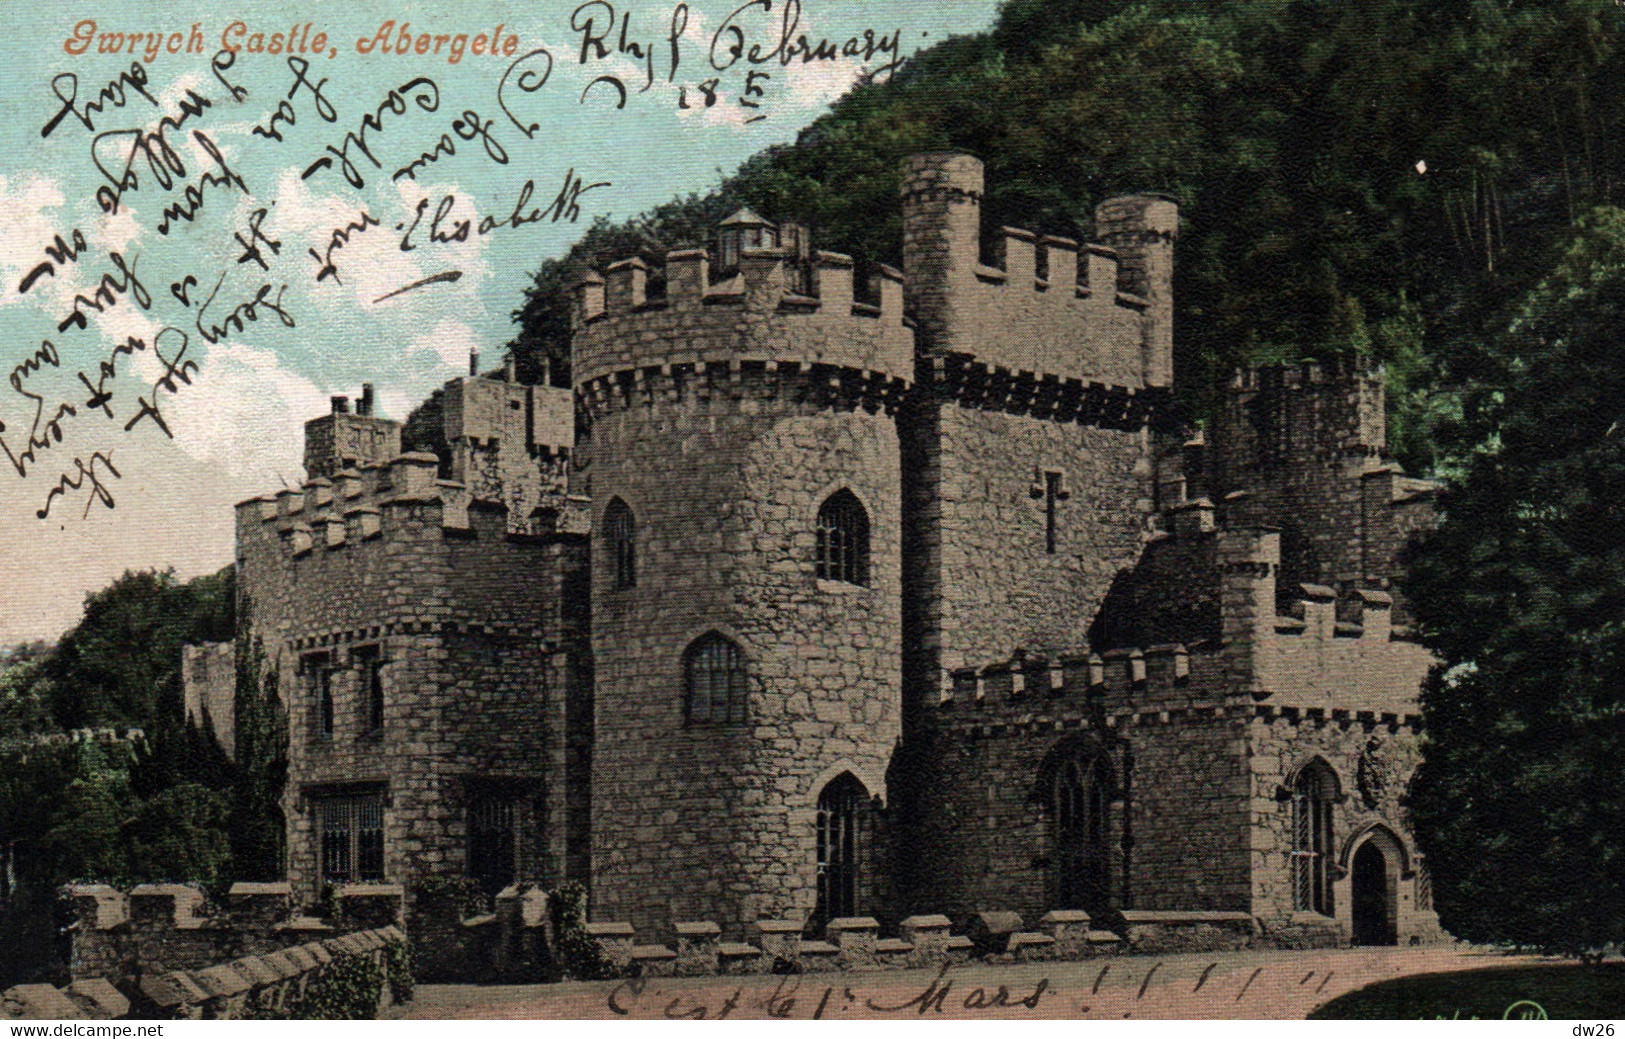 Gwrych Castle Abergele (Conwy & Denbighshire) Valentine's Series - Denbighshire